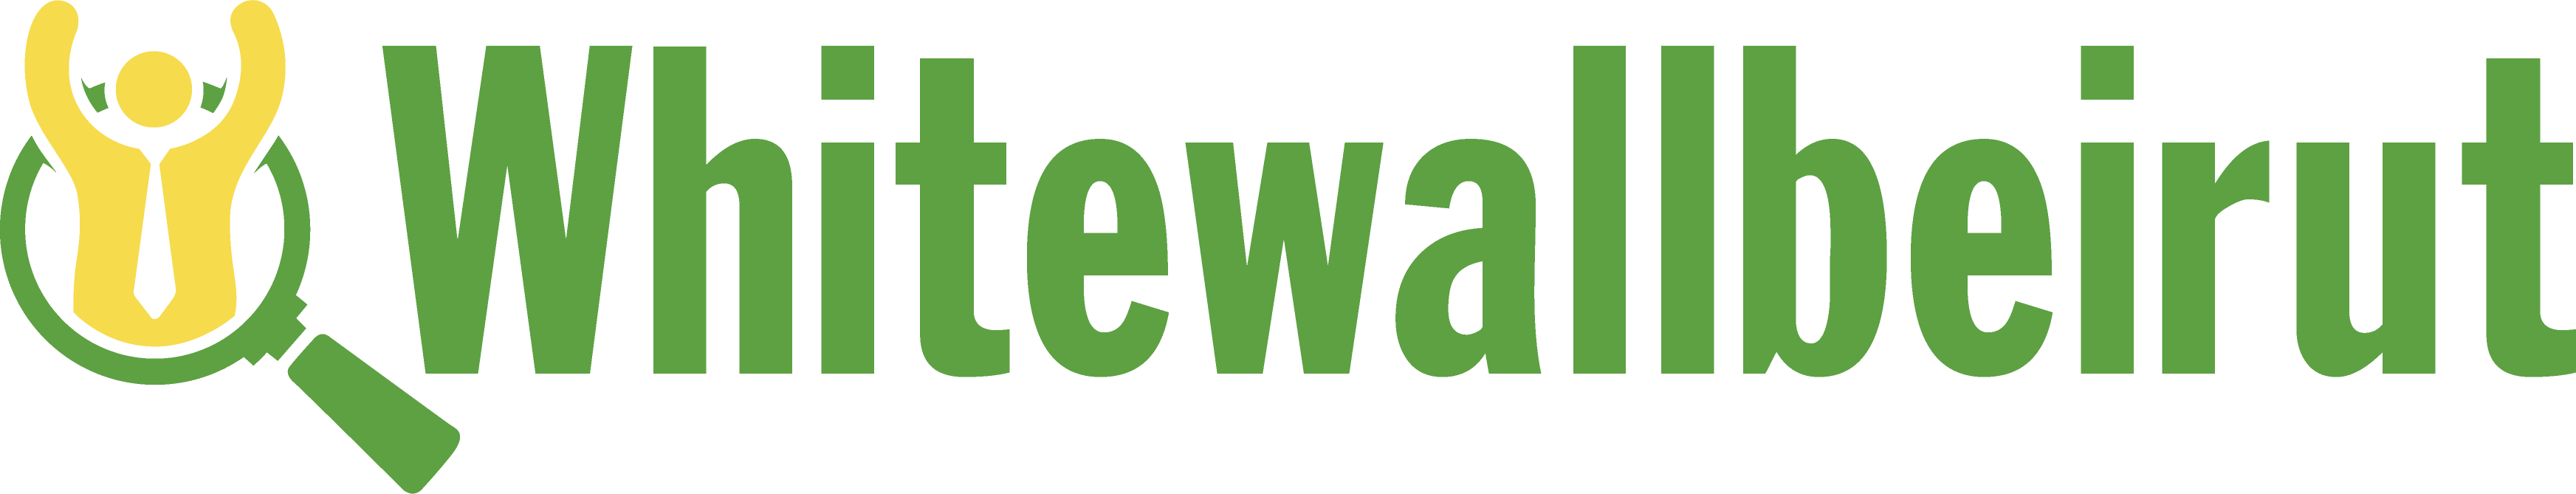 Whitewallbeirut-logo